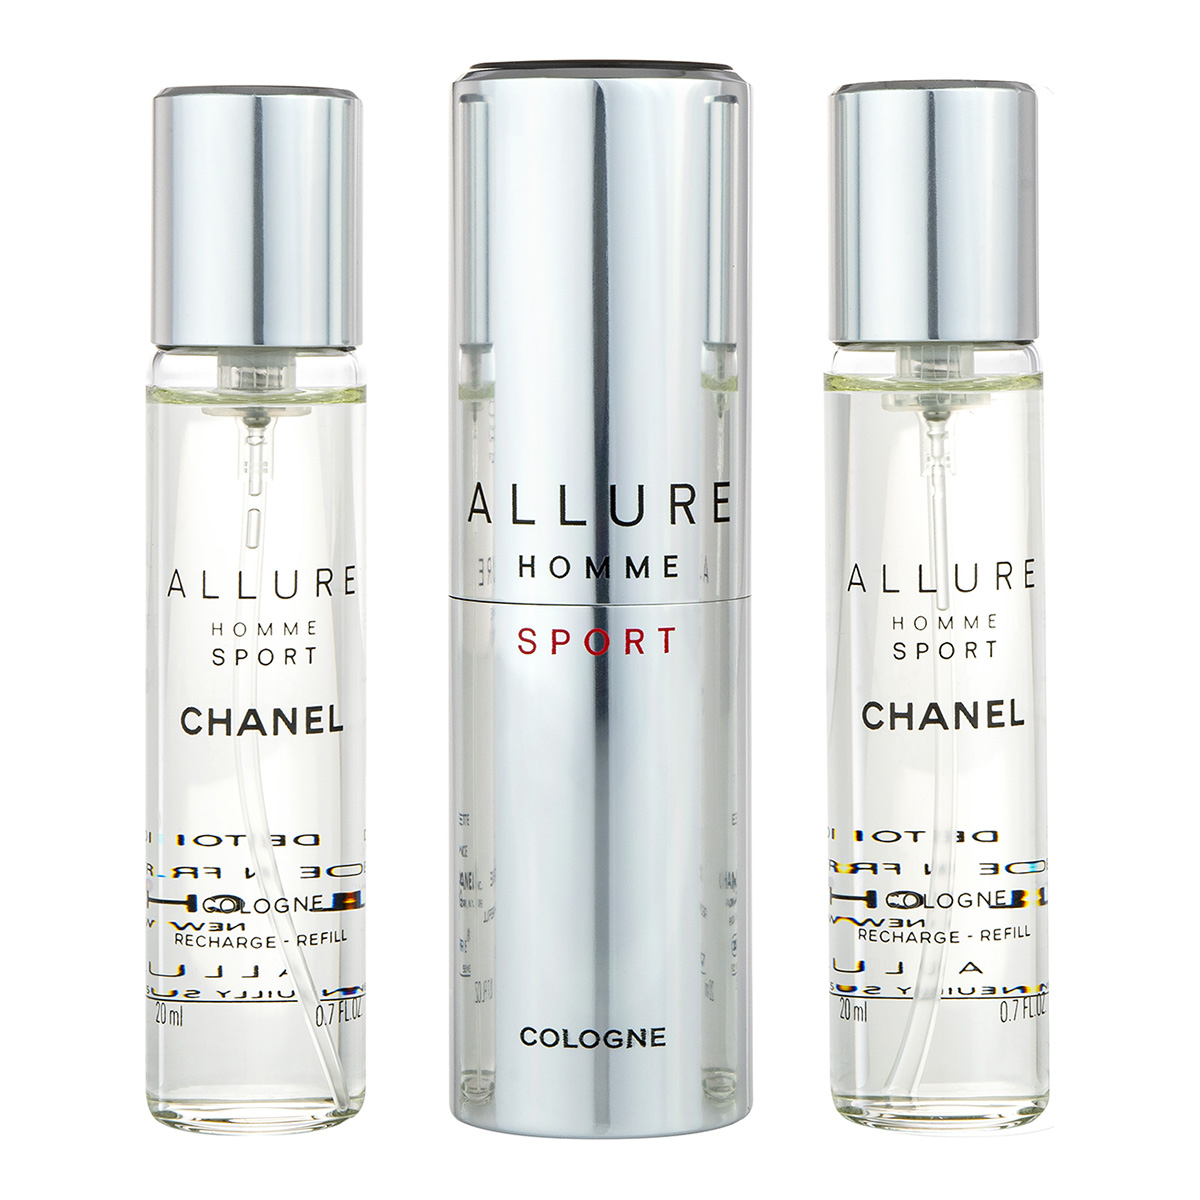 Chanel Allure Homme Sport Cologne Spray 20ml & 2 x 20ml Spray Refills